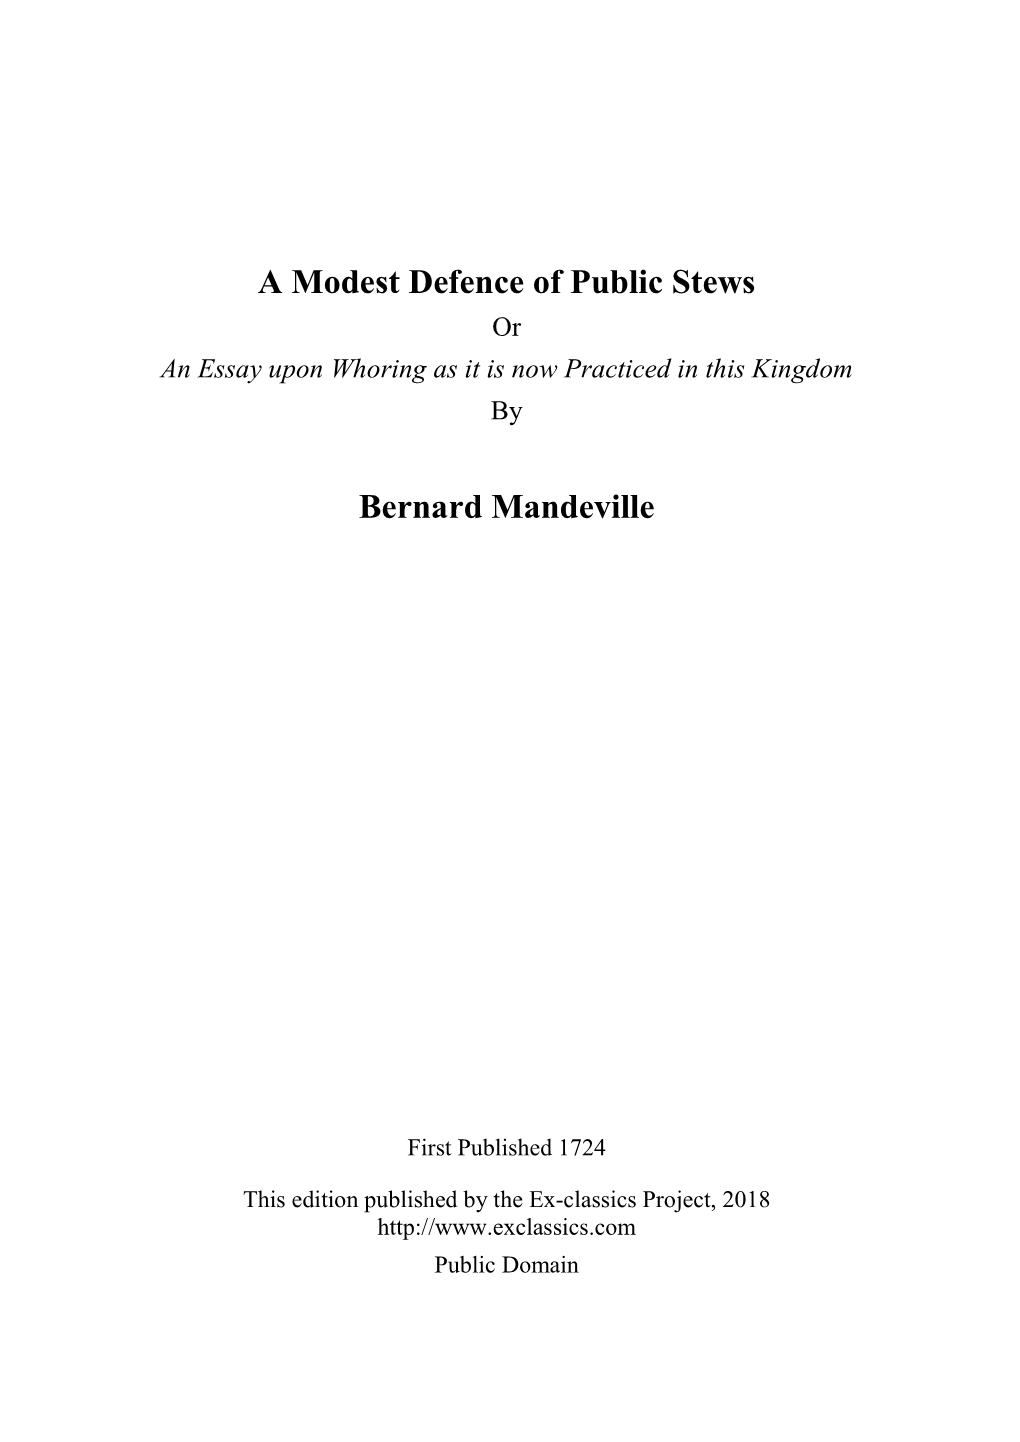 A Modest Defence of Public Stews Bernard Mandeville